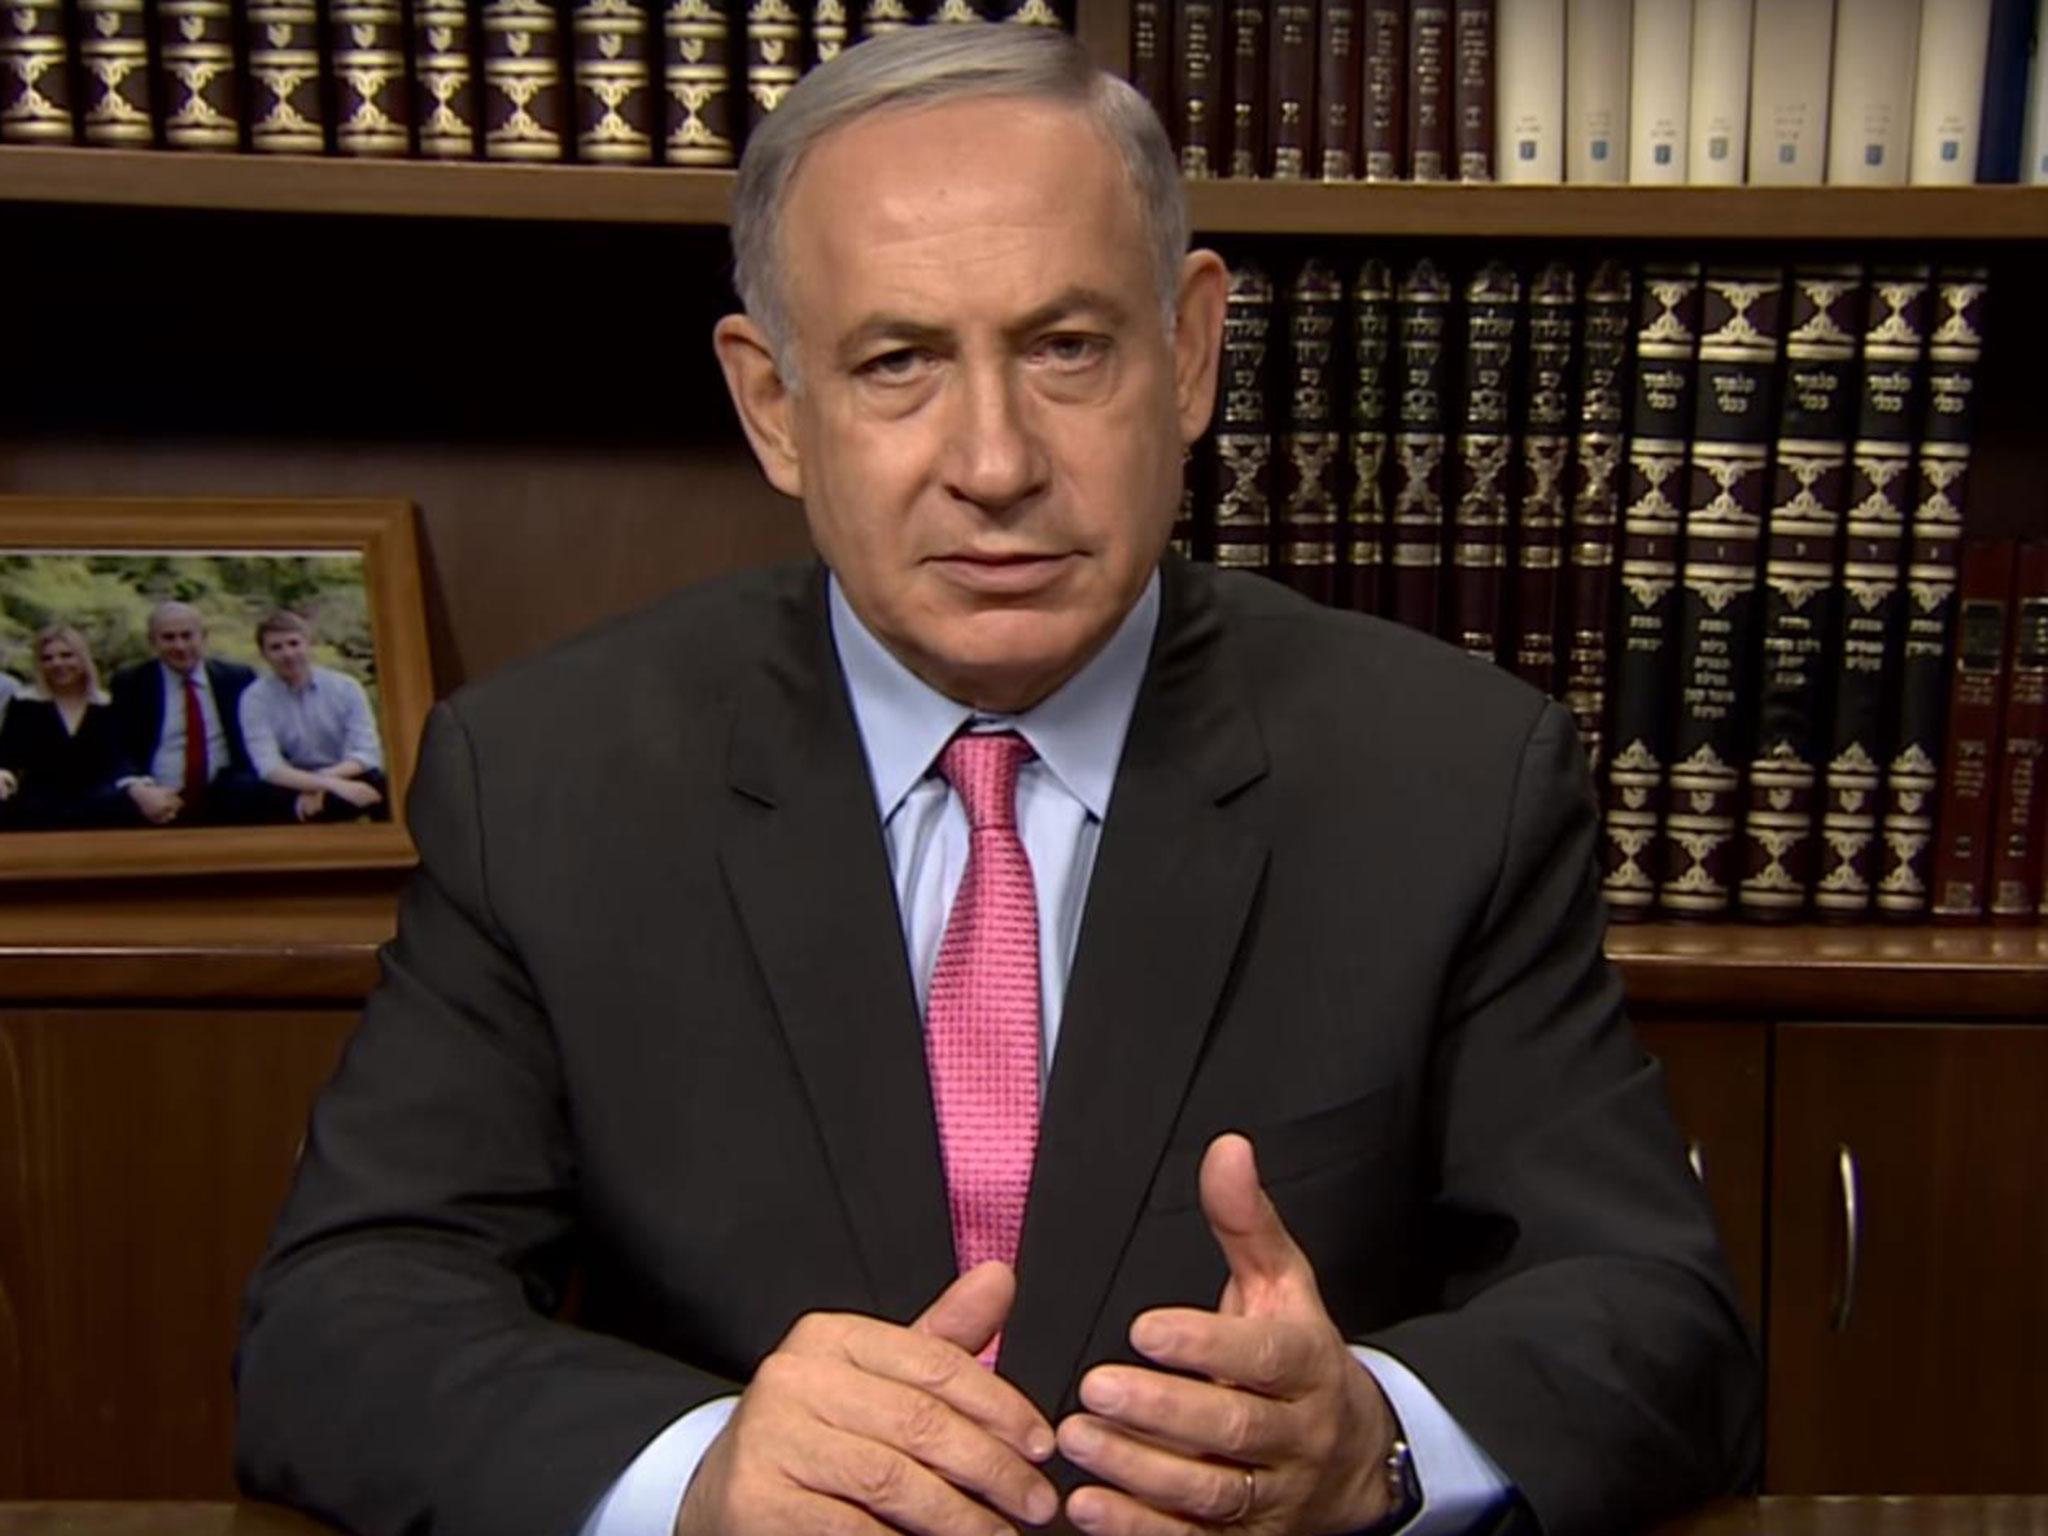 Benjamin Netanyahu making a speech aired on 11 August